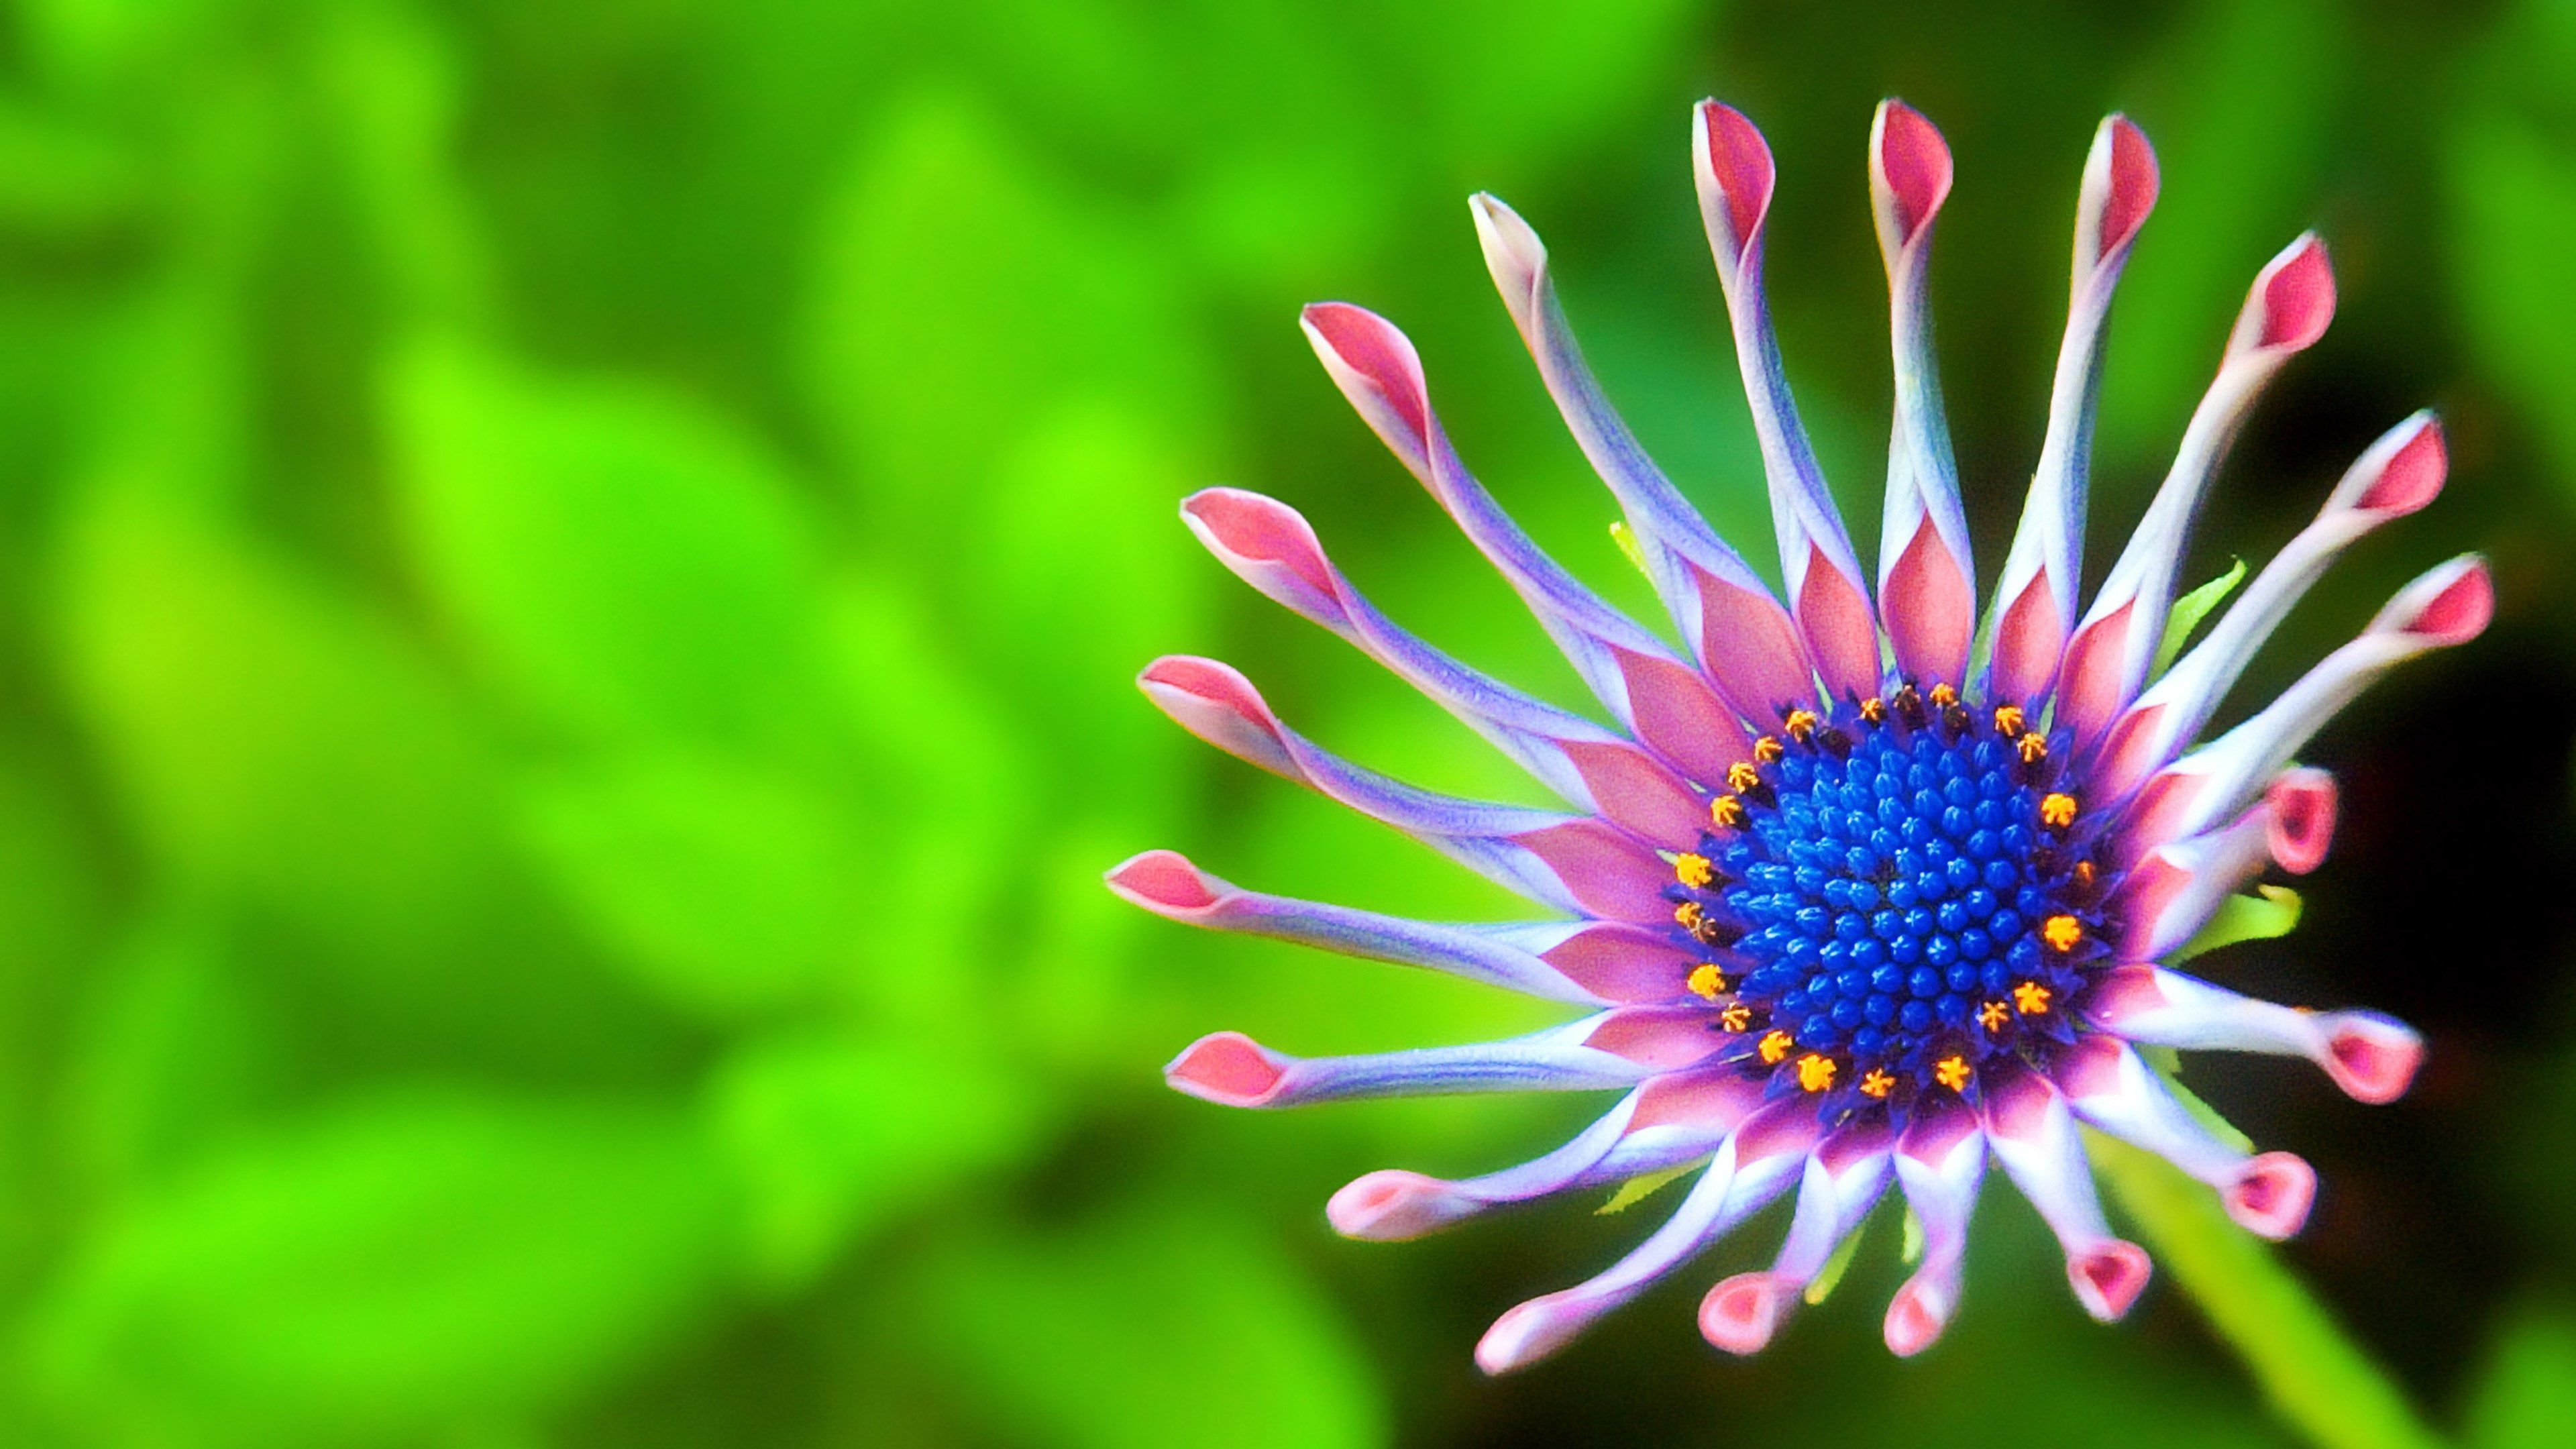 beautiful flower 4k HD image. Best flower wallpaper, Macro photography nature, Flower image wallpaper